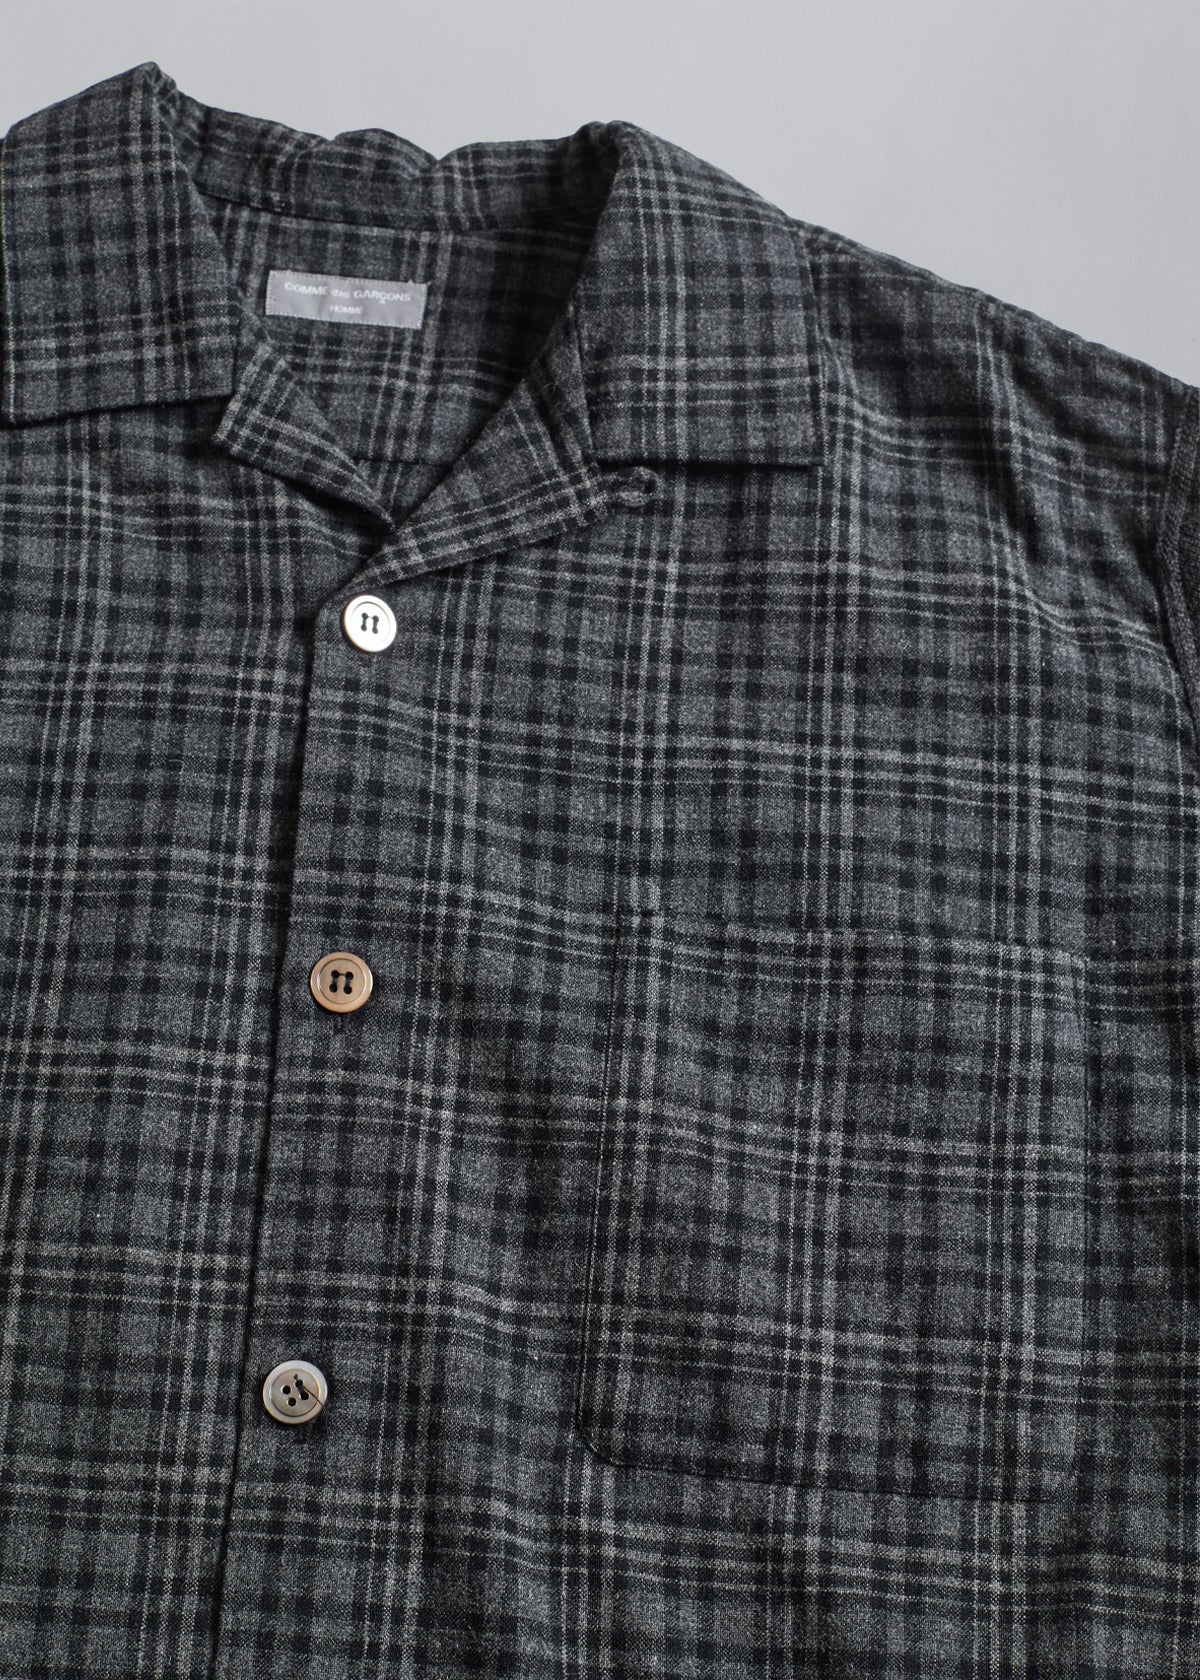 Homme Wool Checkered Shirt 2002 - Medium - The Archivist Store